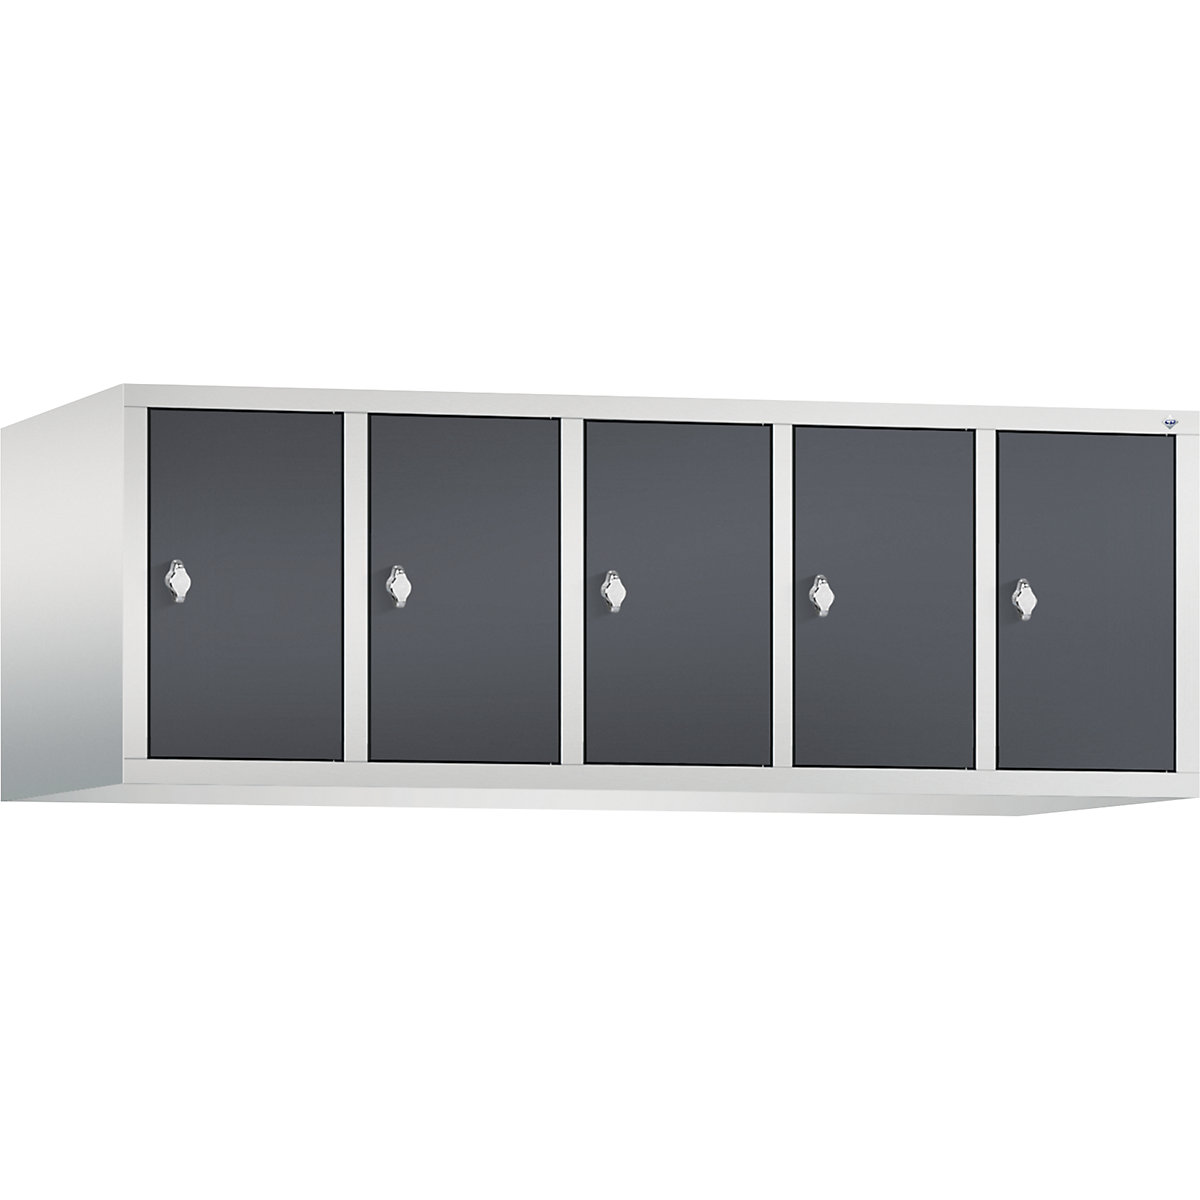 C+P – Altillo CLASSIC, 5 compartimentos, anchura de compartimento 300 mm, gris luminoso / gris negruzco